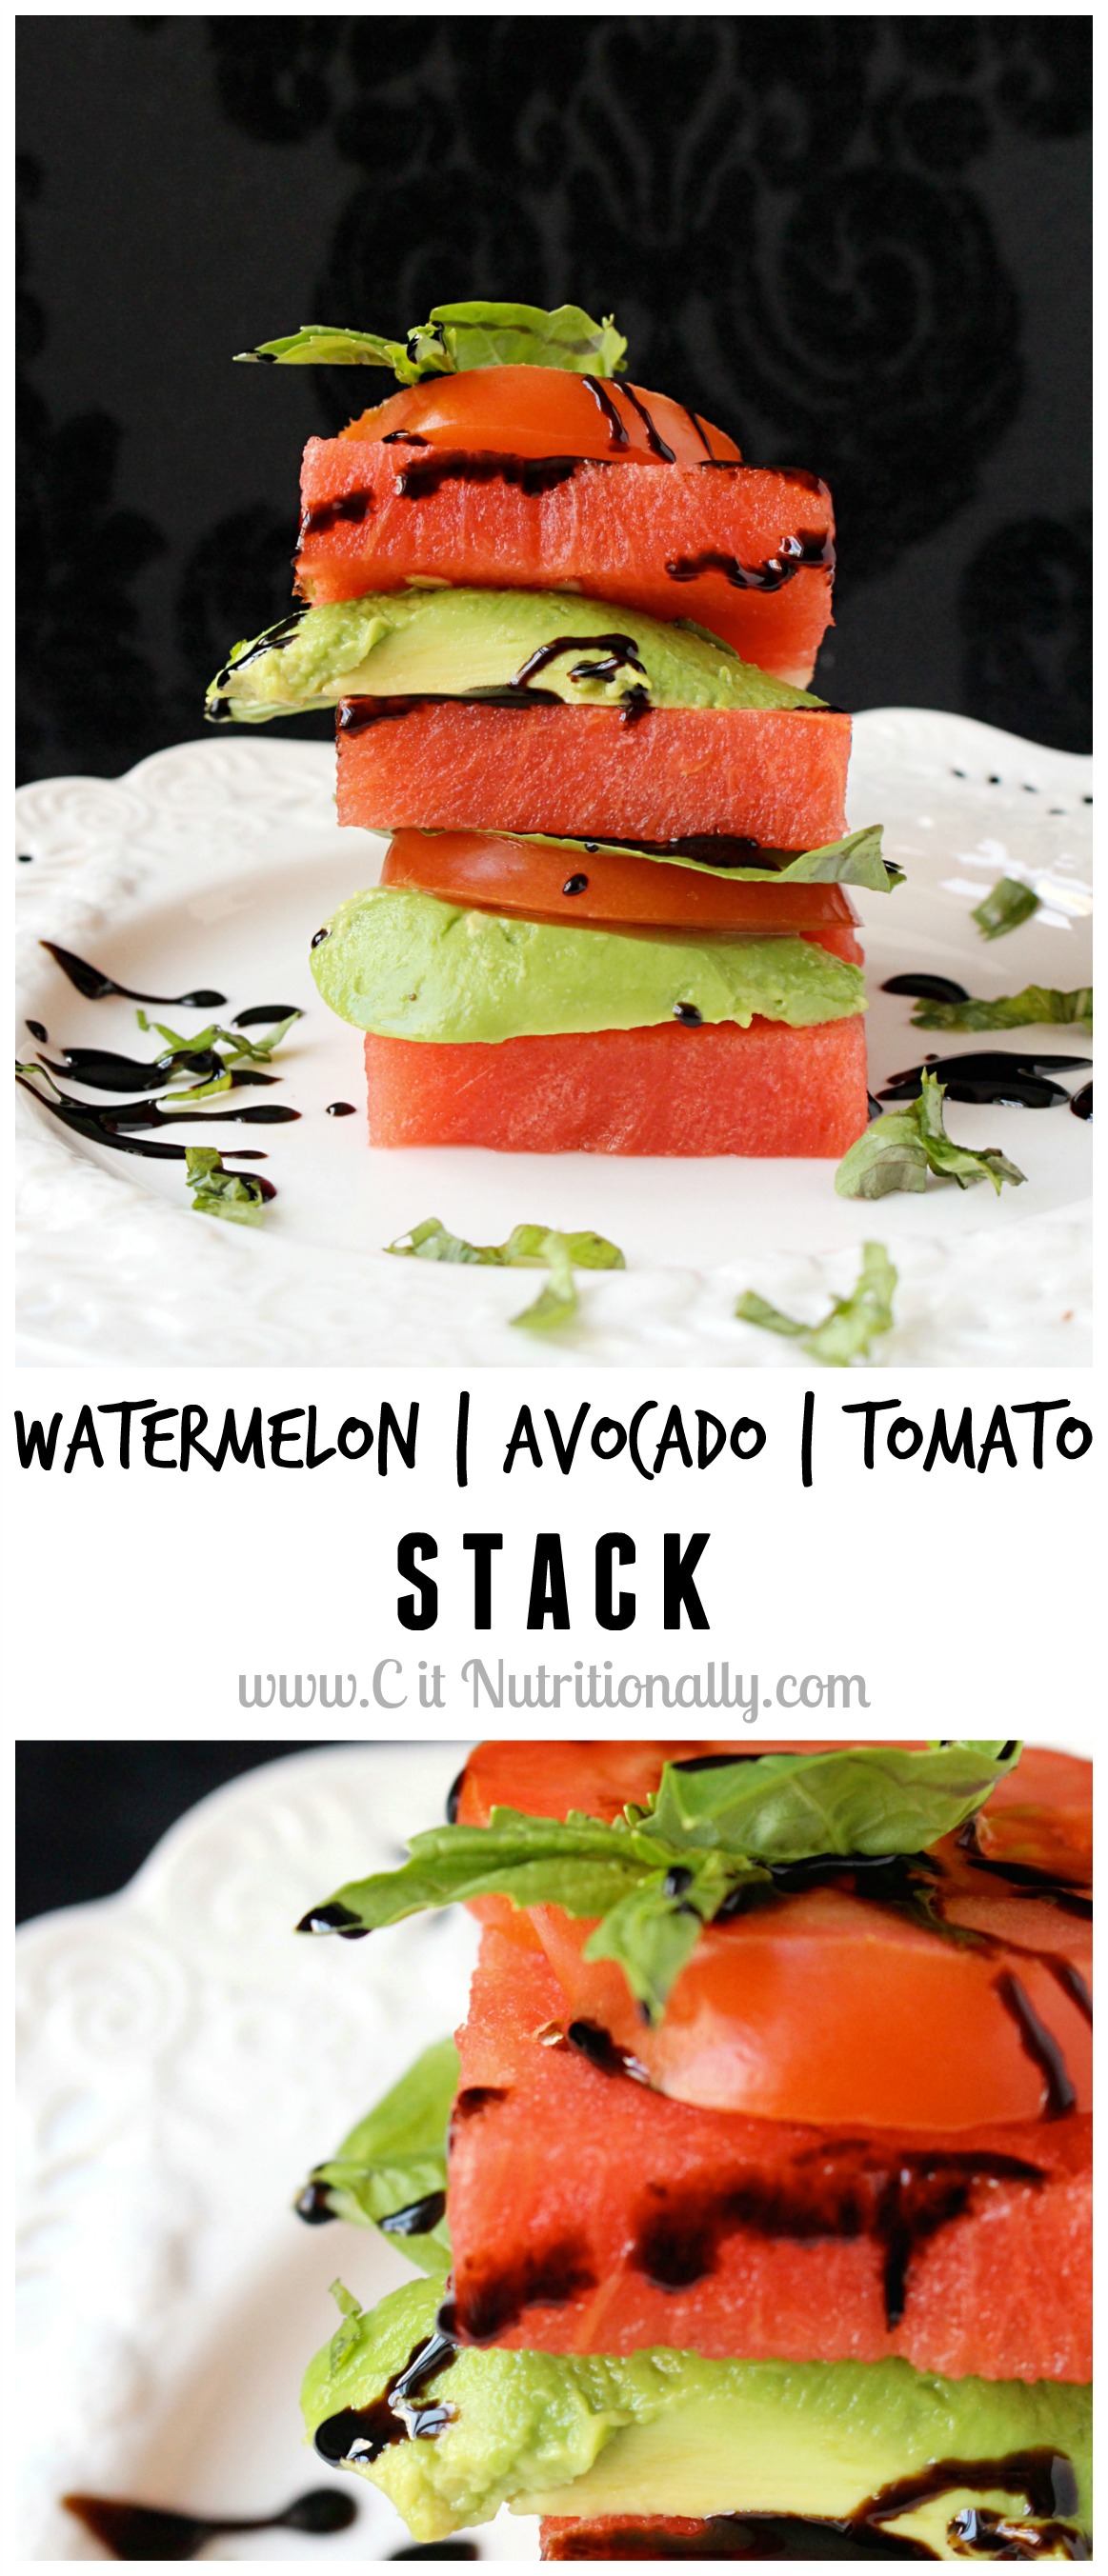 Watermelon Avocado Tomato Stack | C it Nutritionally